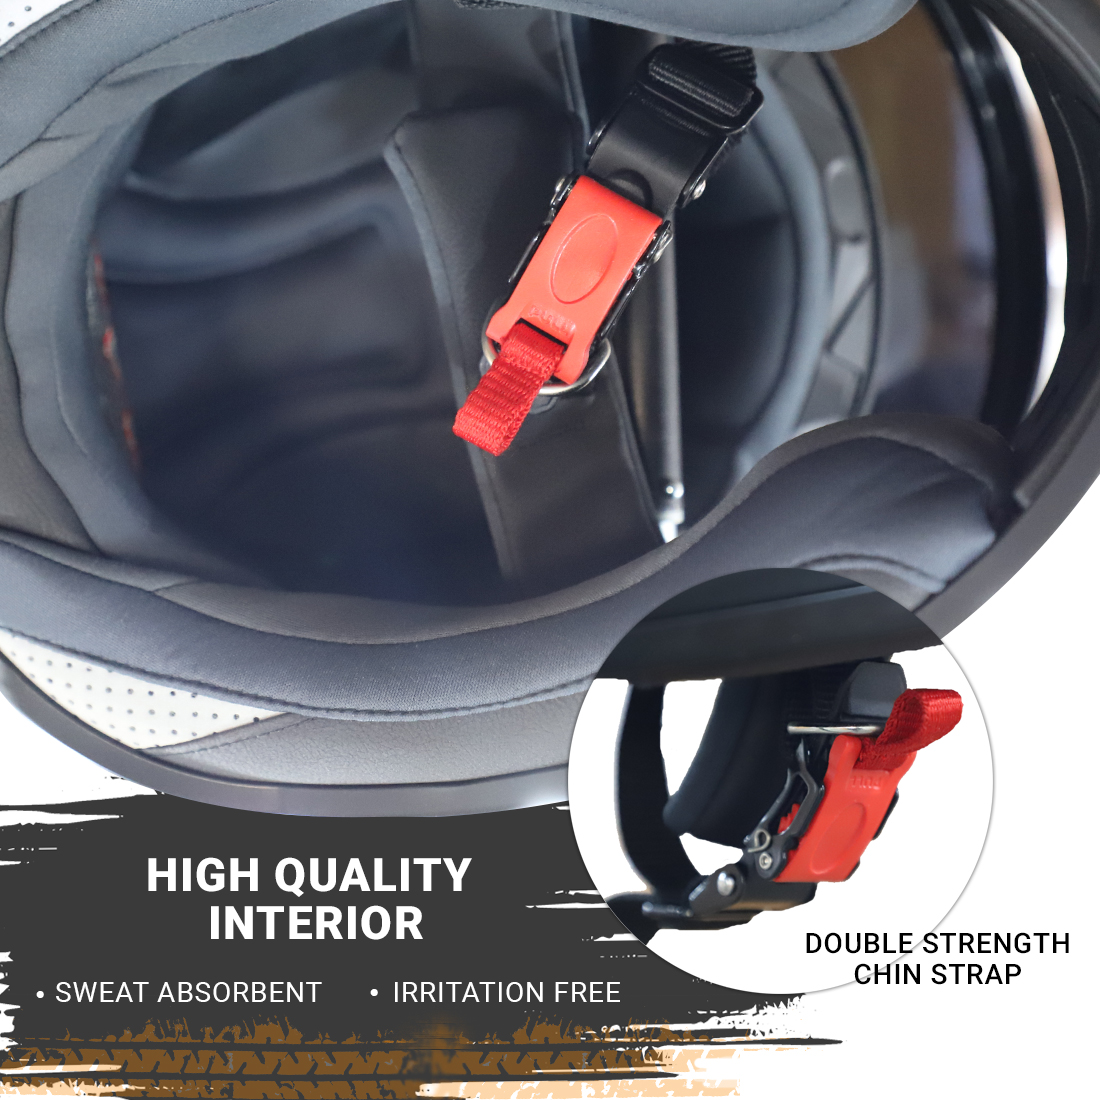 Steelbird SBH-17 Terminator ISI Certified Full Face Graphic Helmet (Matt Black Fluo Light Orange With Smoke Visor)